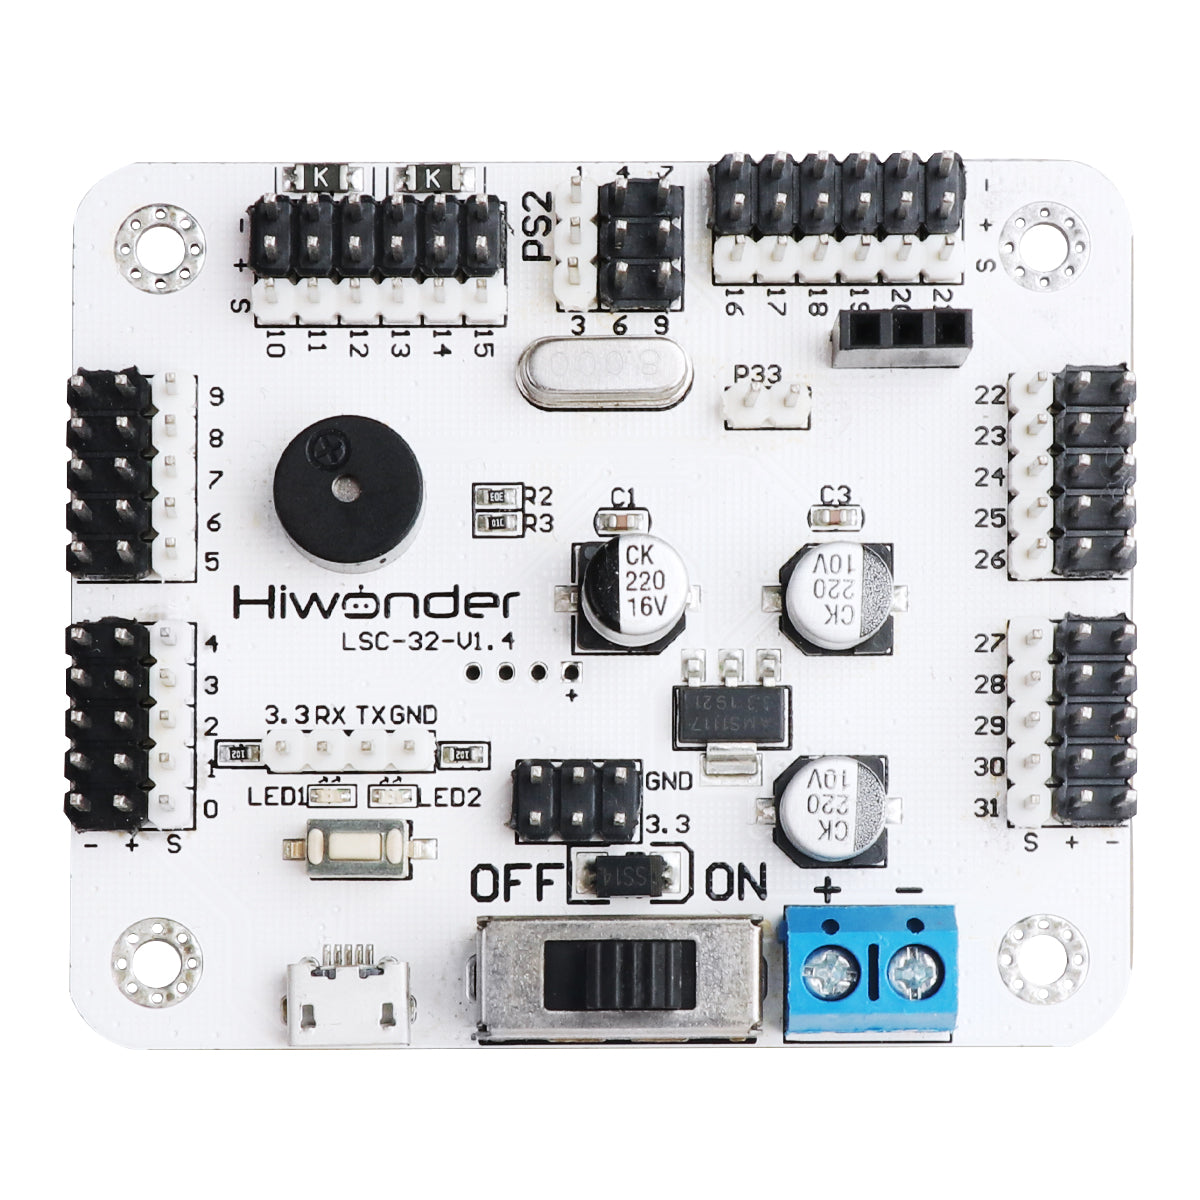 LSC-32: Hiwonder 32 Channel Digital Servo Controller with 16M Memory/